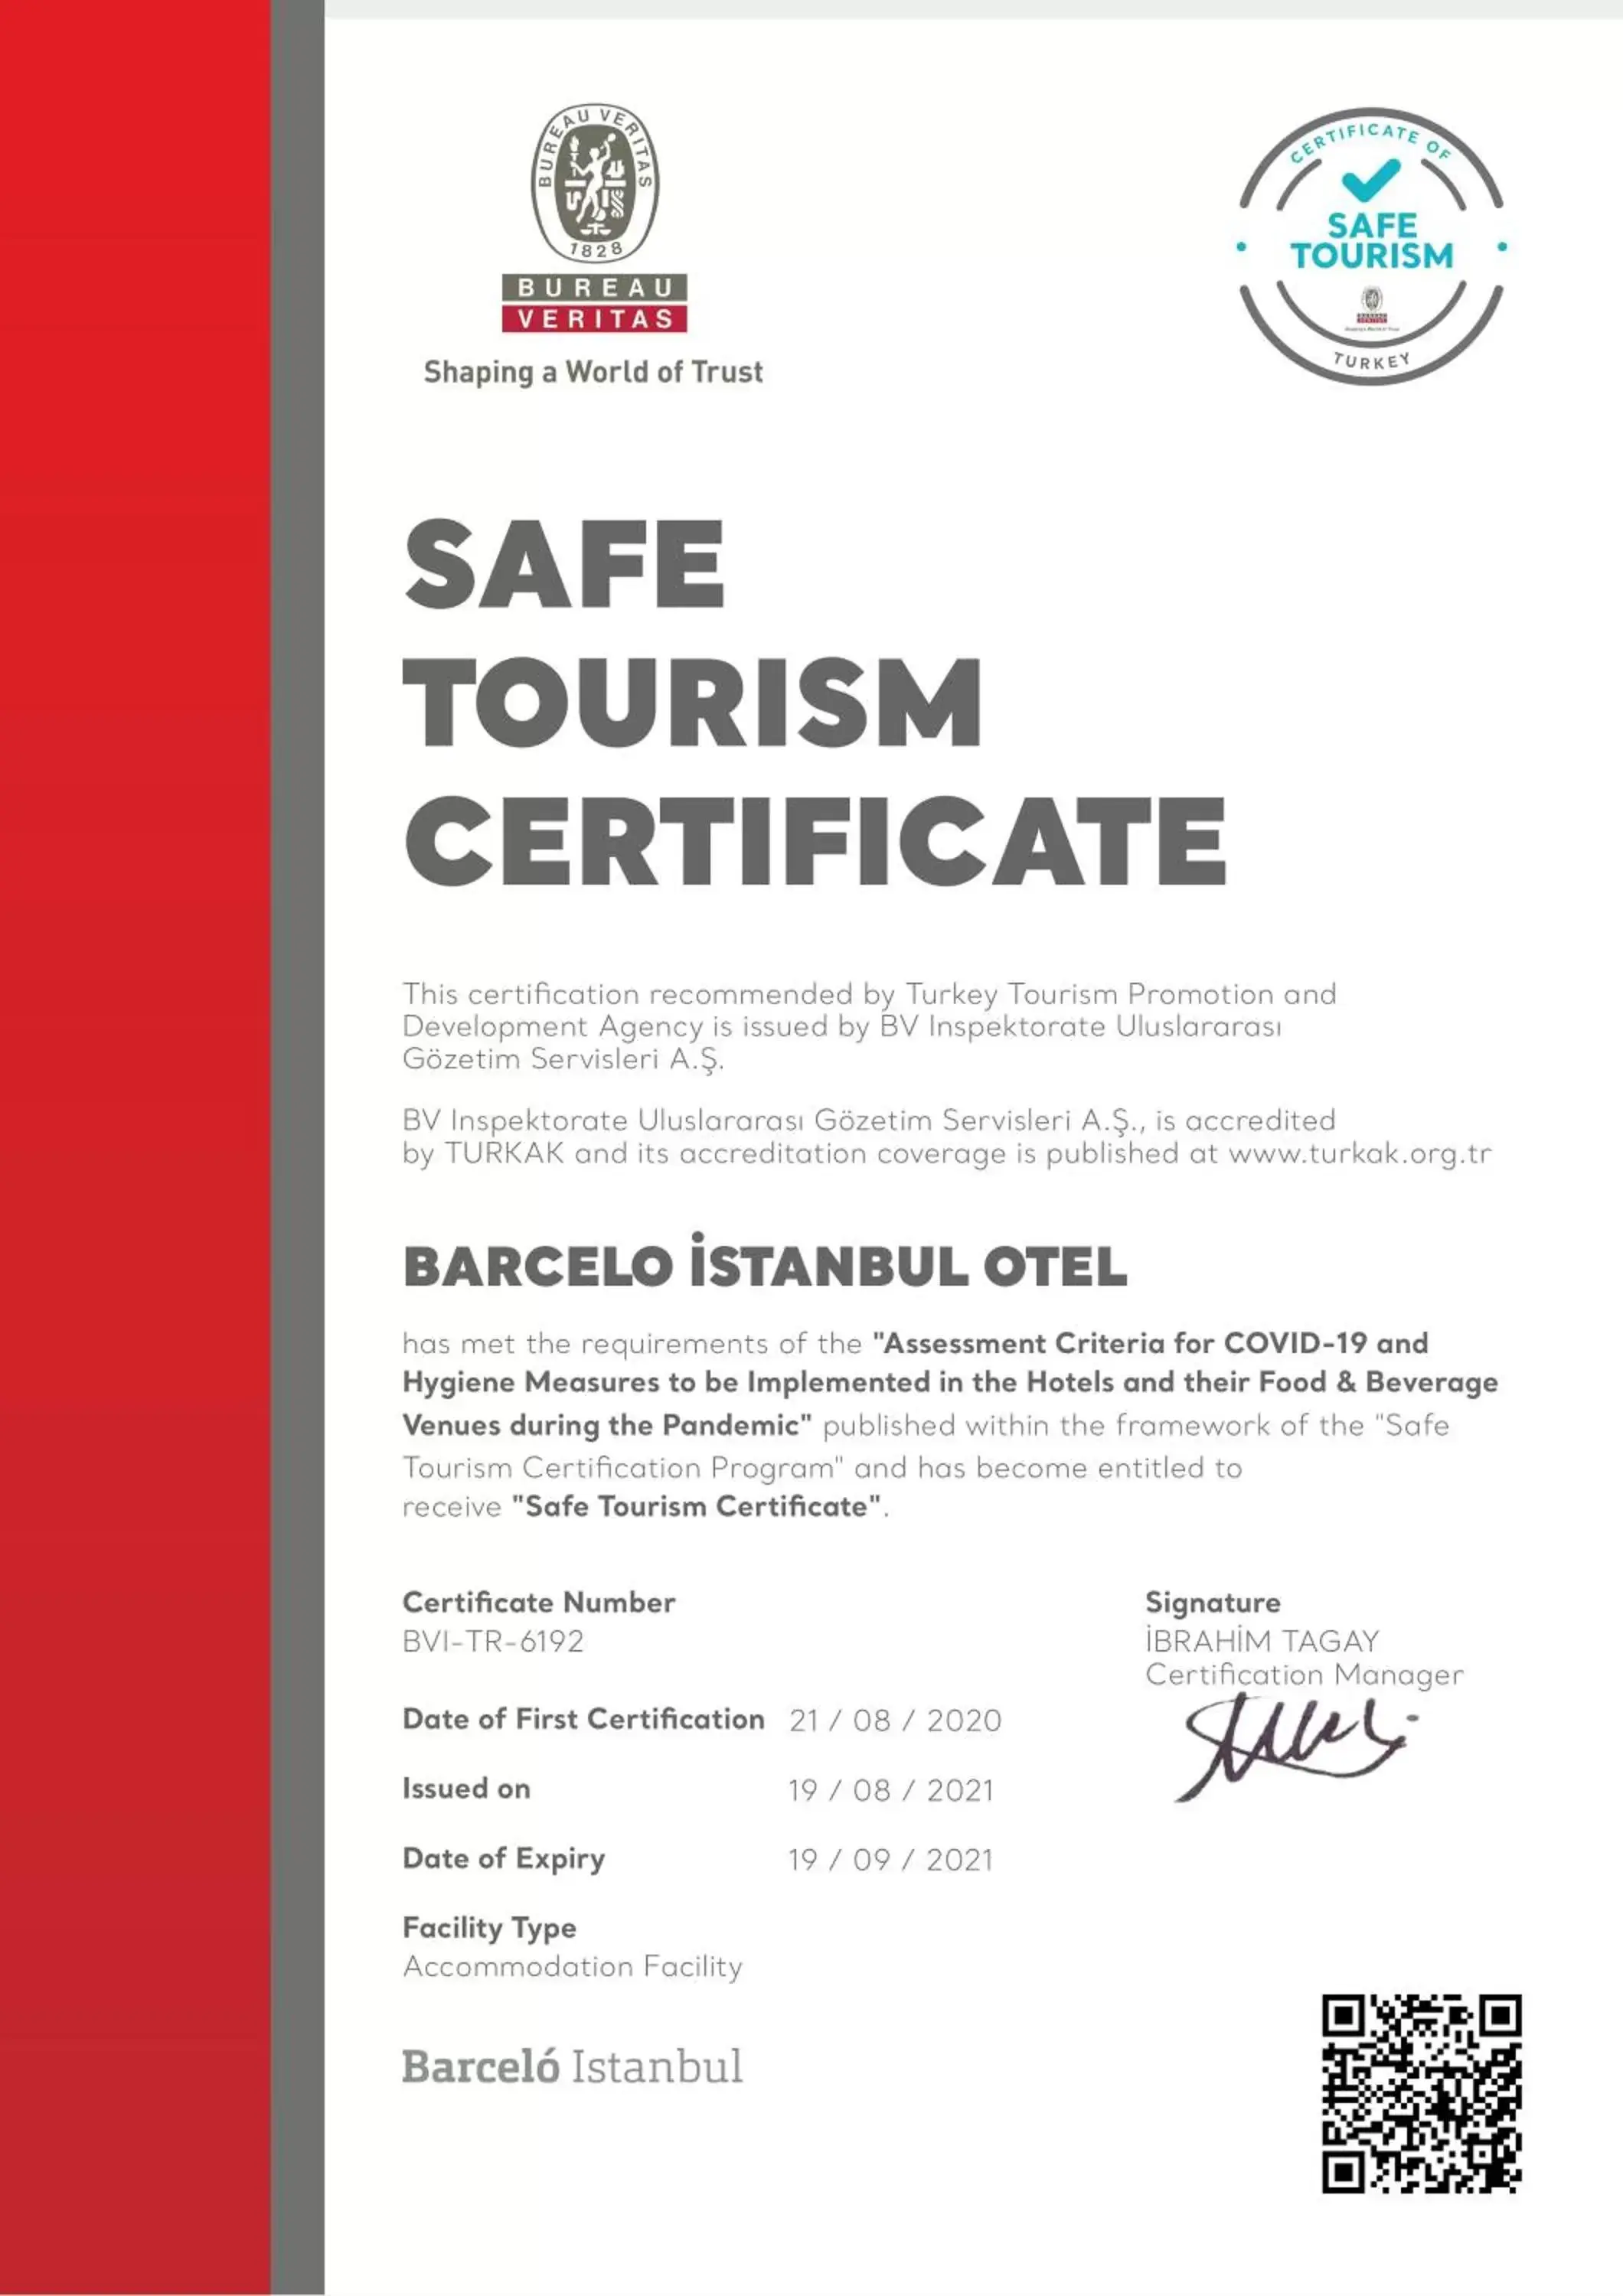 Certificate/Award in Barceló Istanbul